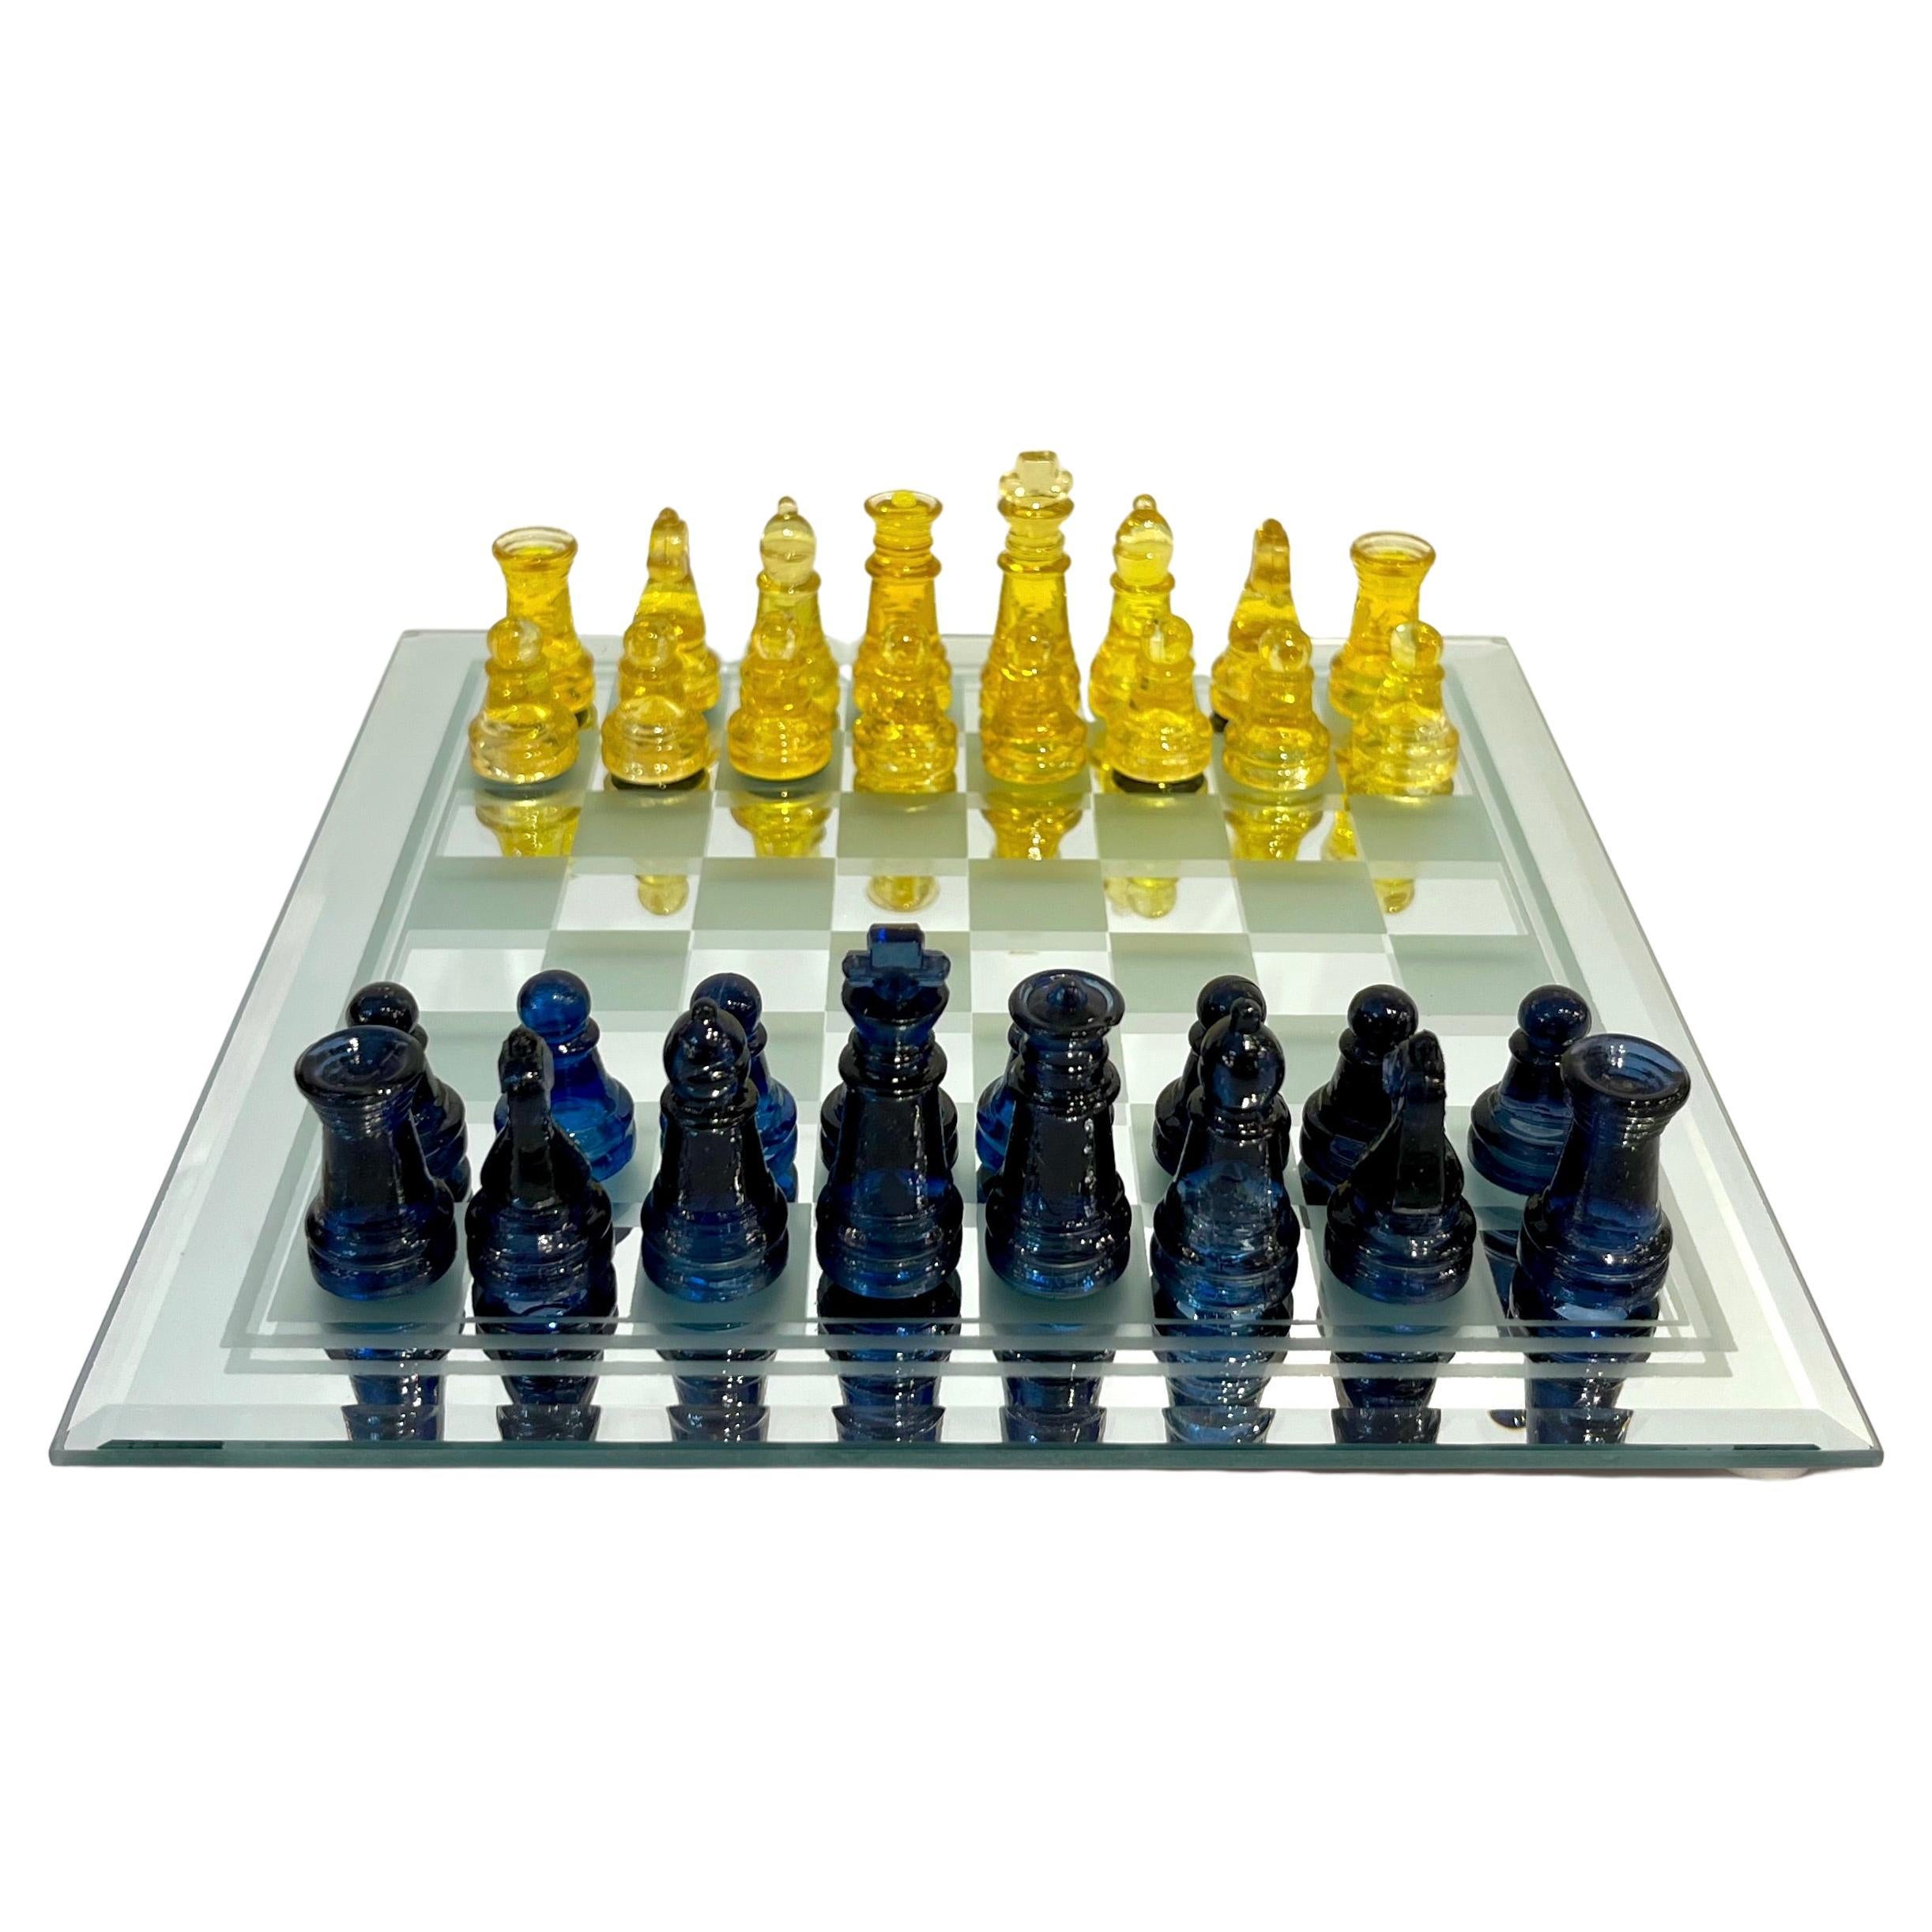 Contemporary Minimalist Blue & Yellow Murano Glass Chess Set on Mirrored Board